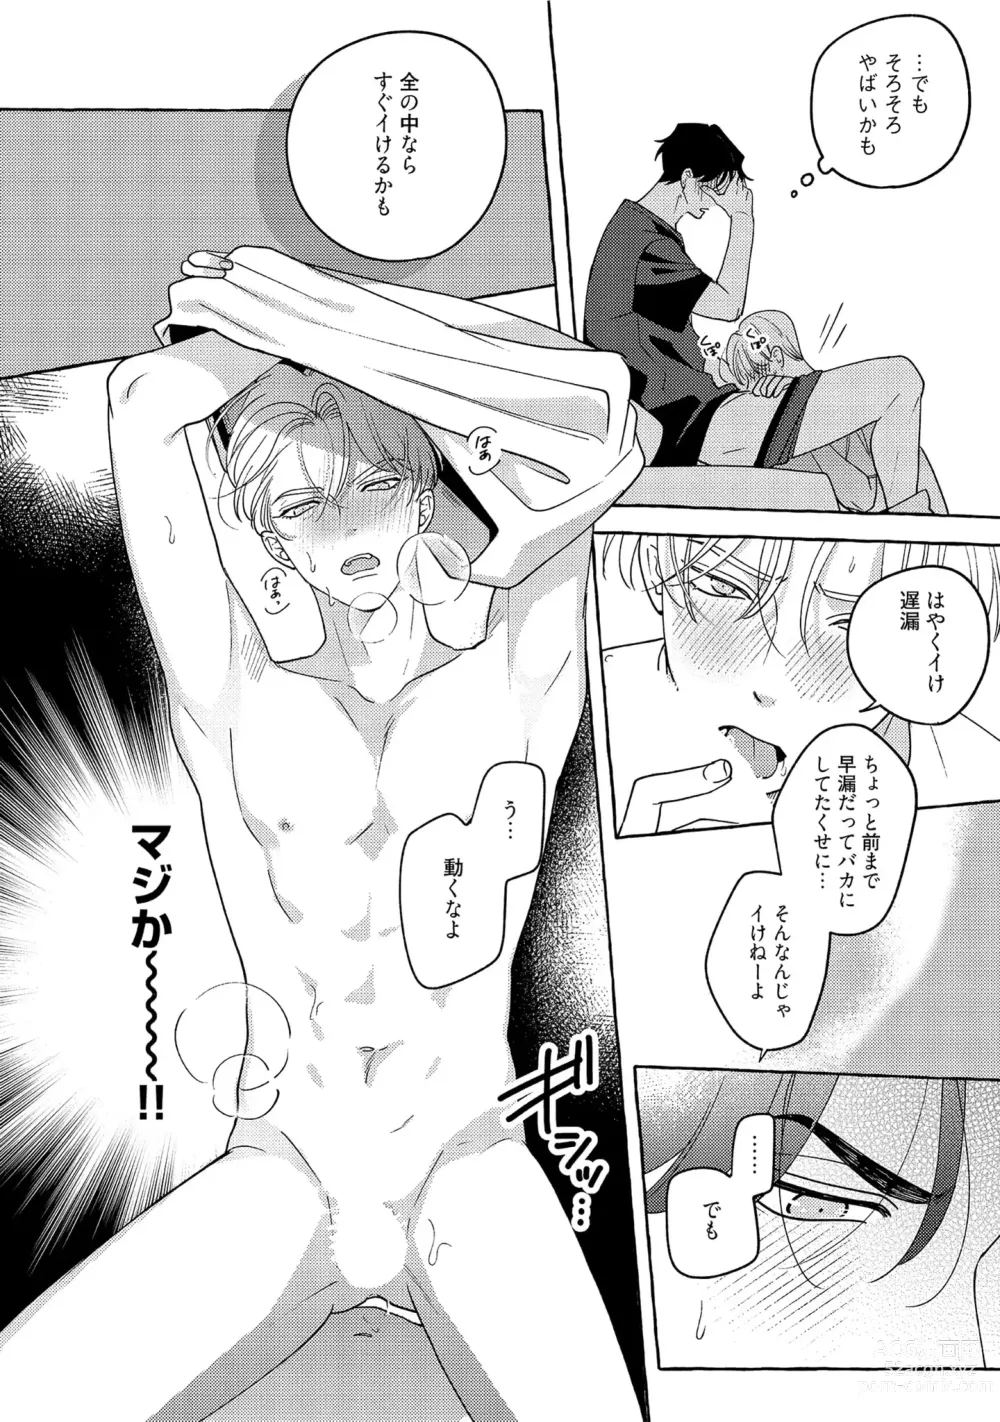 Page 238 of manga Fake Fact Lips